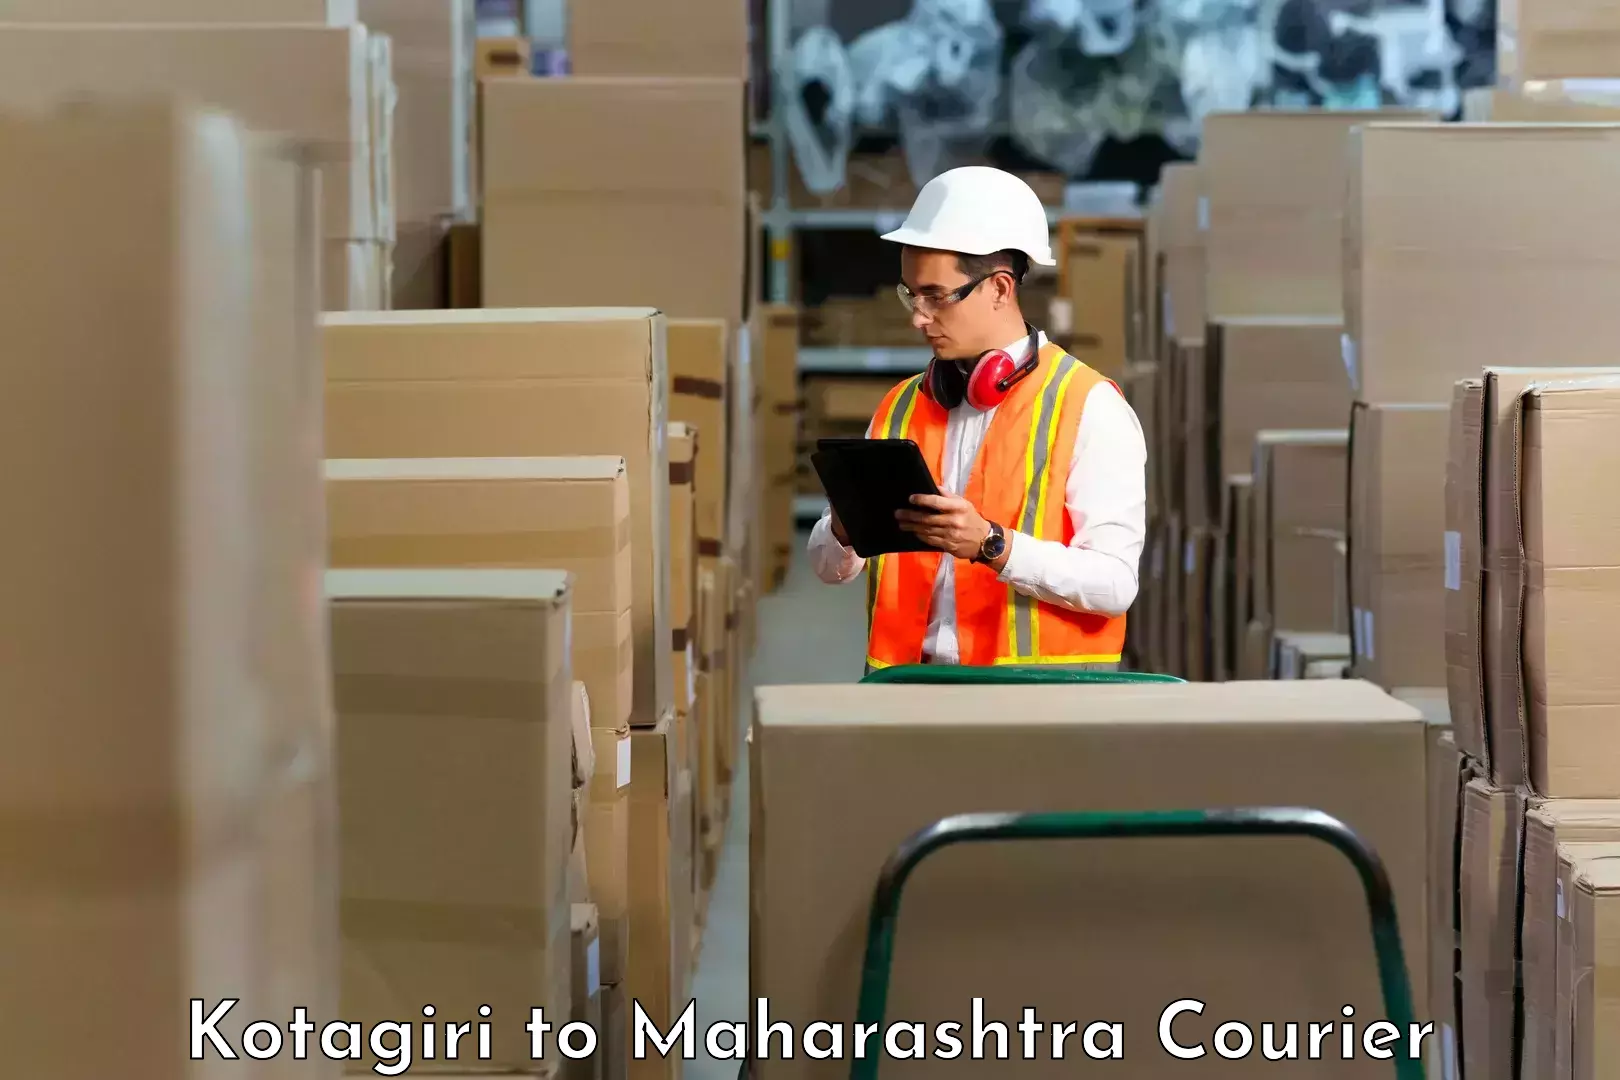 Cash on delivery service Kotagiri to Nagpur